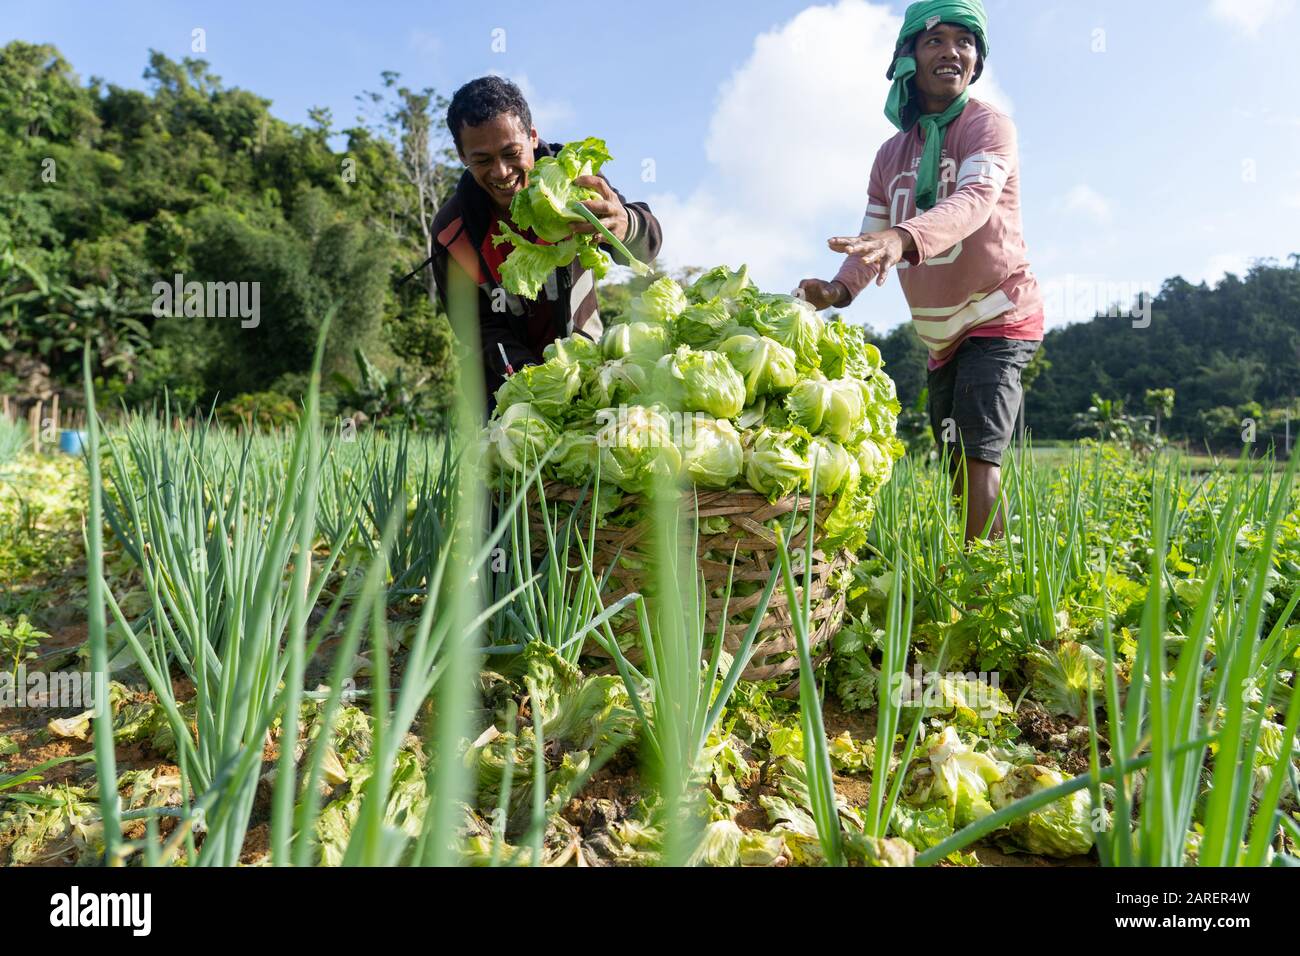 Two Filipino farmers harvesting lettuce in a mountain area of Cebu,Philippines Stock Photo